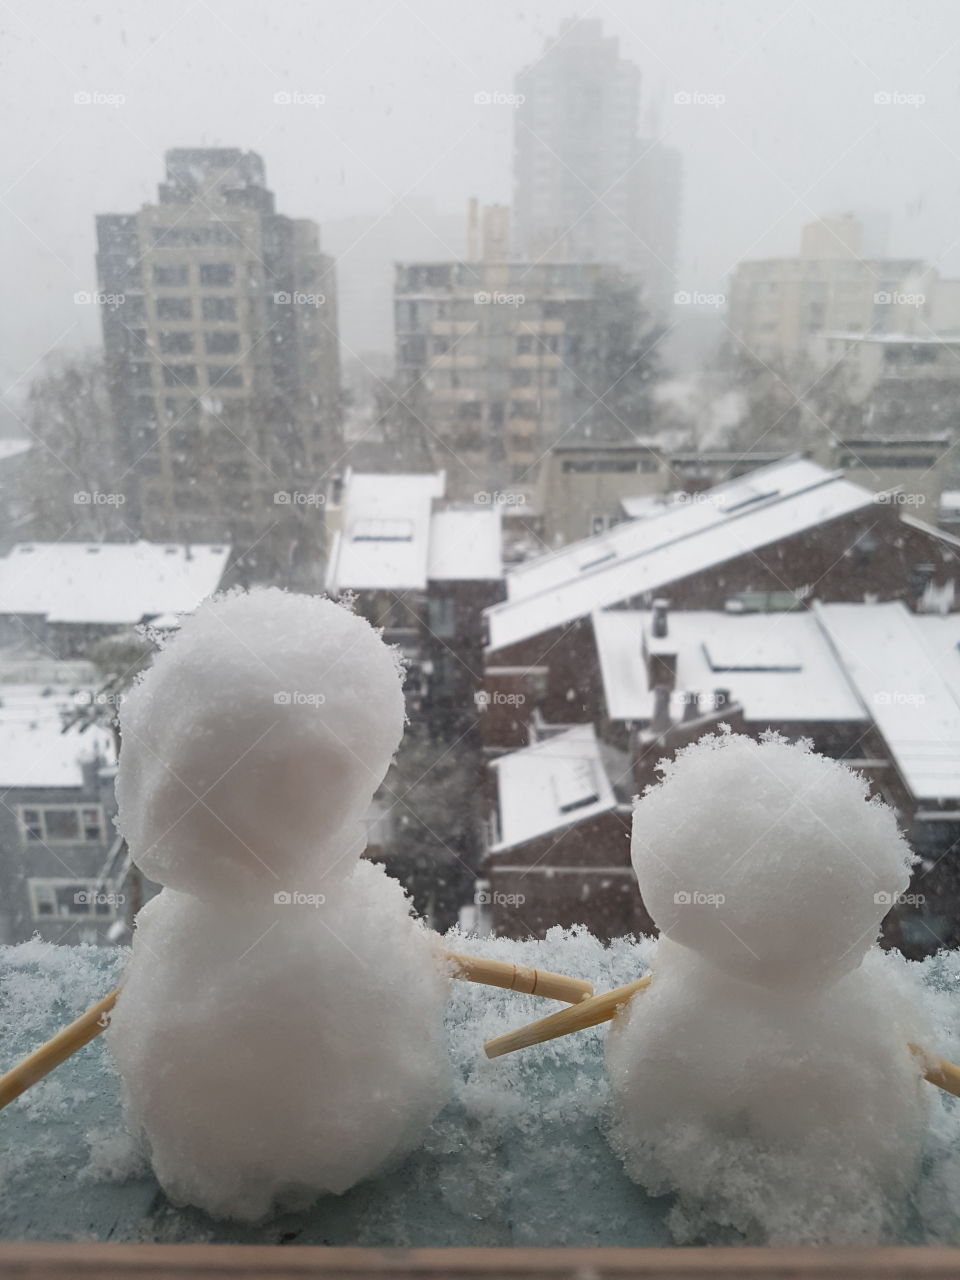 snow men on an apartment window ledge